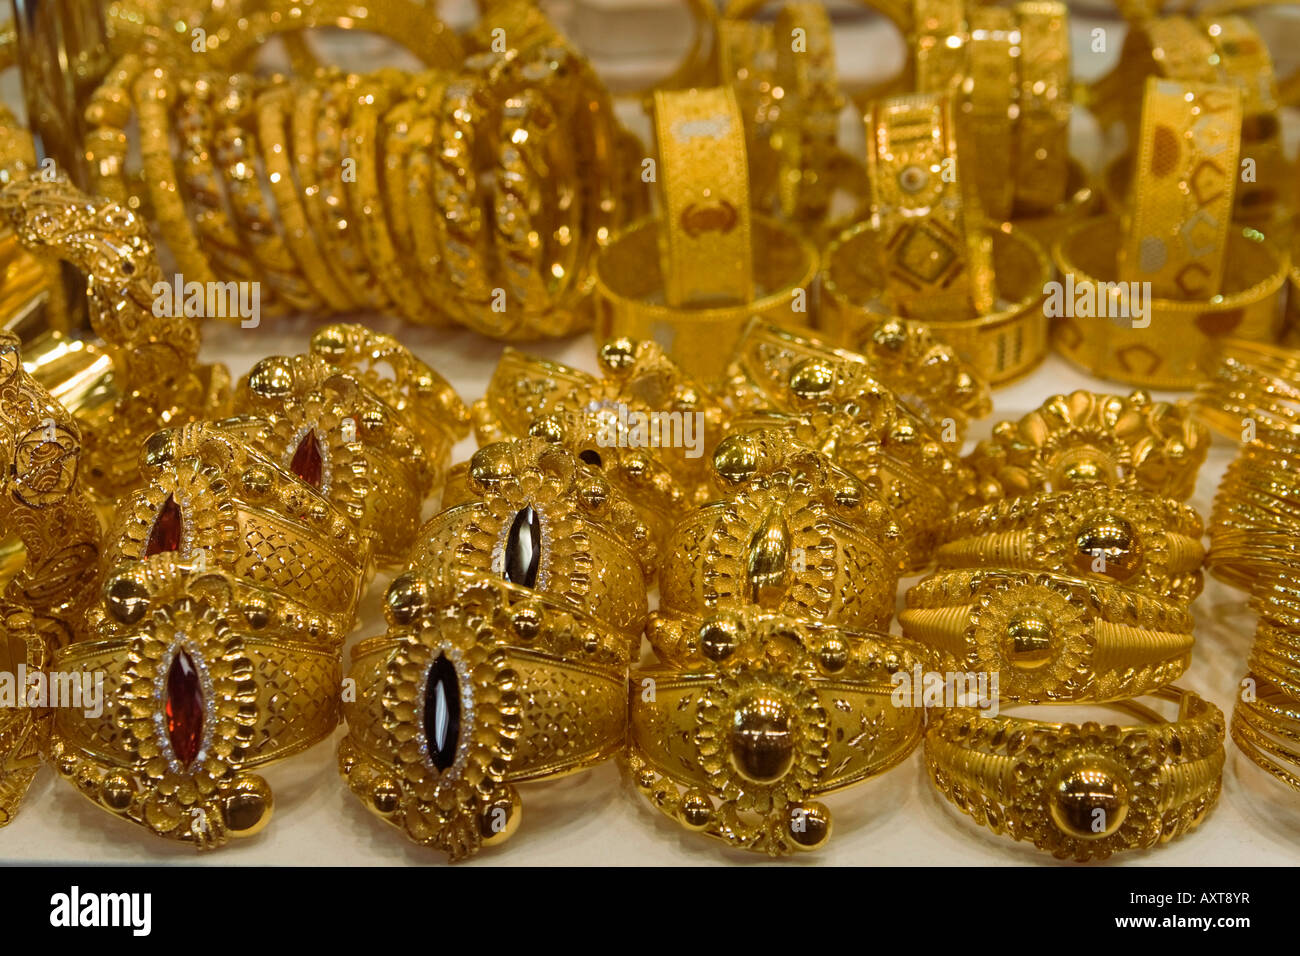 Dubai Deira gold market gold souq shop window Dubai Gold Souk Schaufenster Stock Photo